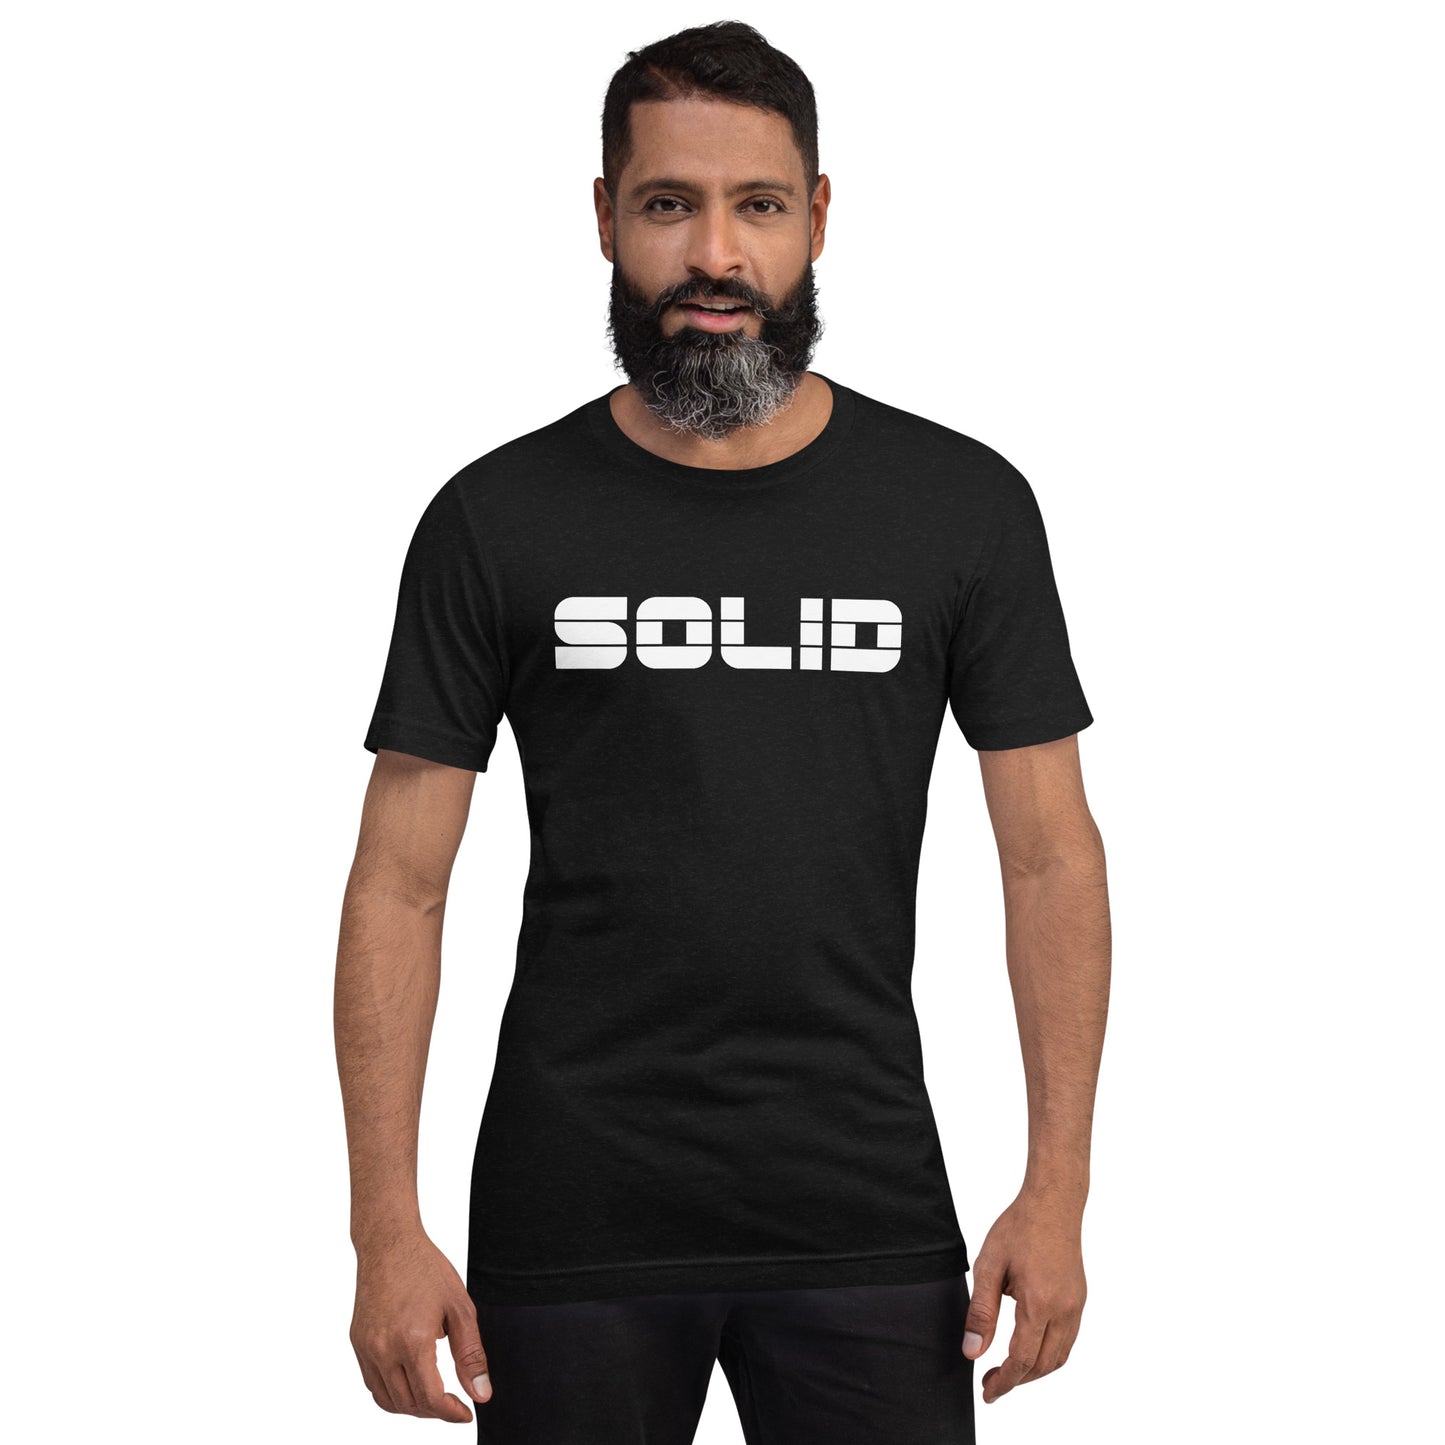 SOLID T-shirt (unisex)